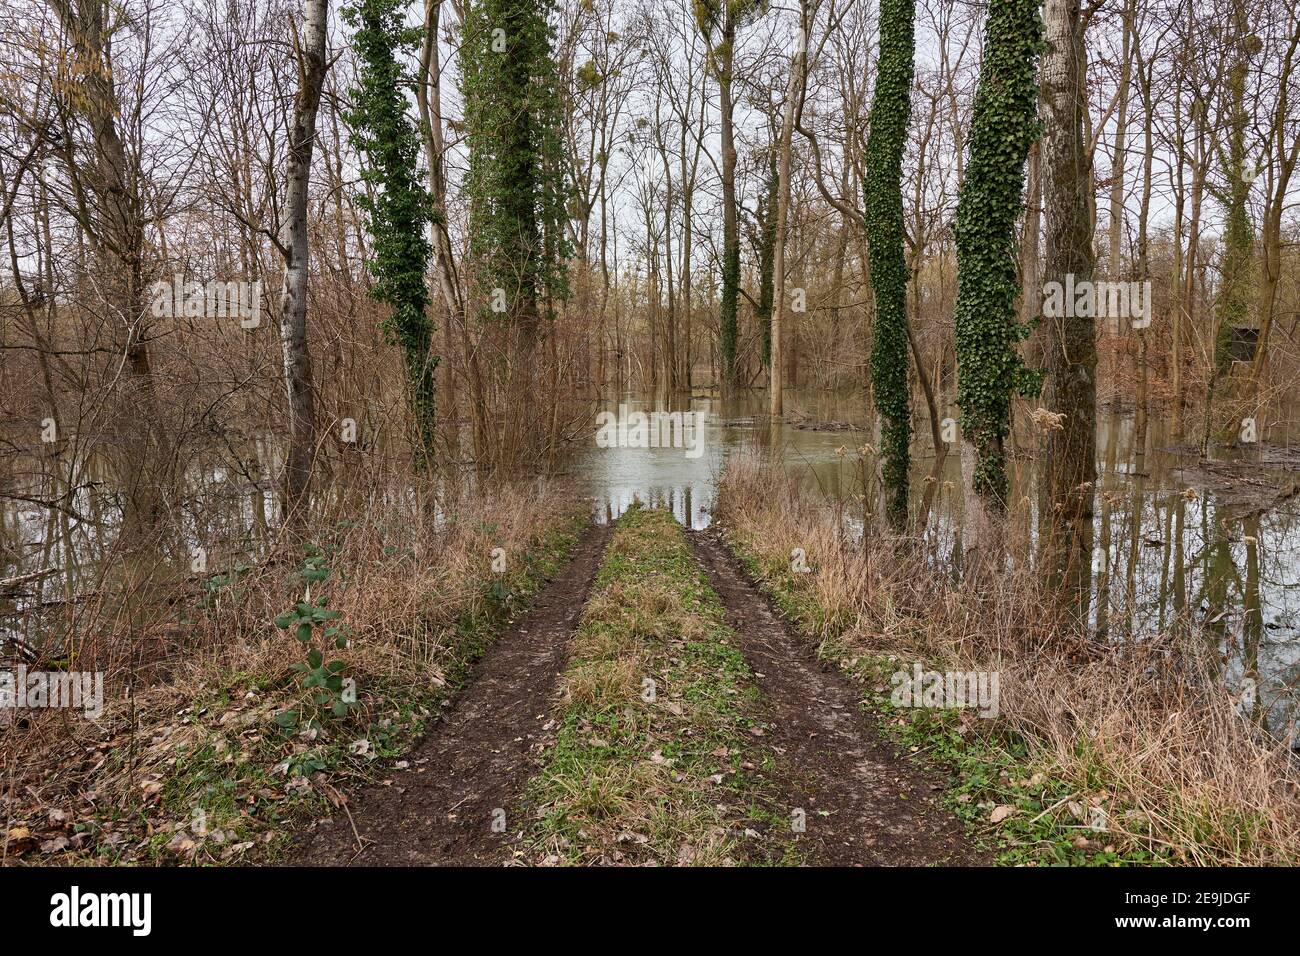 Ruts of a flooded dirt road through a floodplain riparian forest at Altrhein river in Plittersdorf, Germany Stock Photo